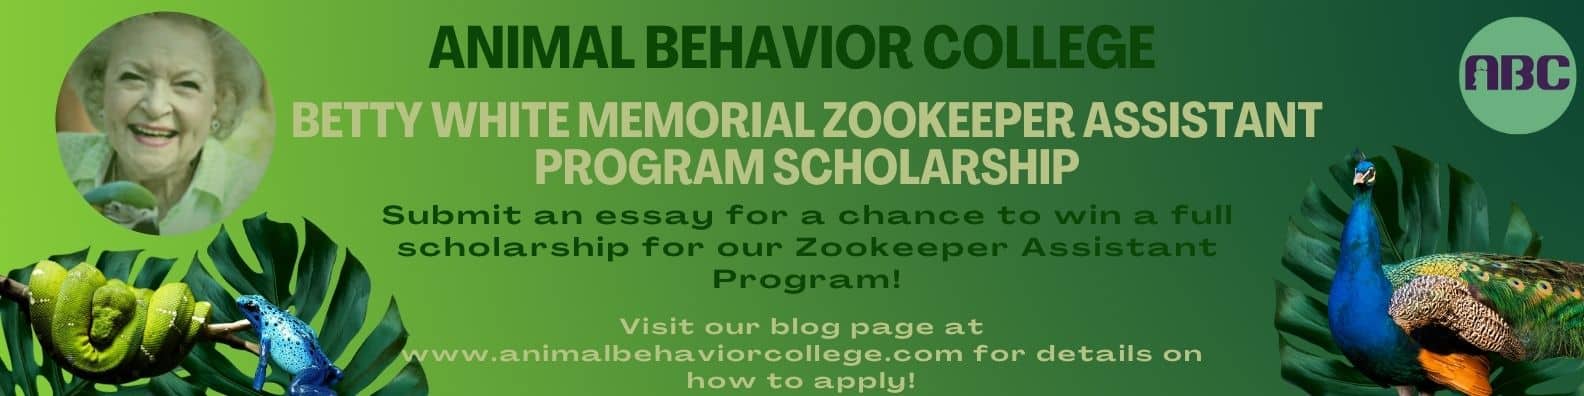 Animal Behavior College Betty White Scholarship